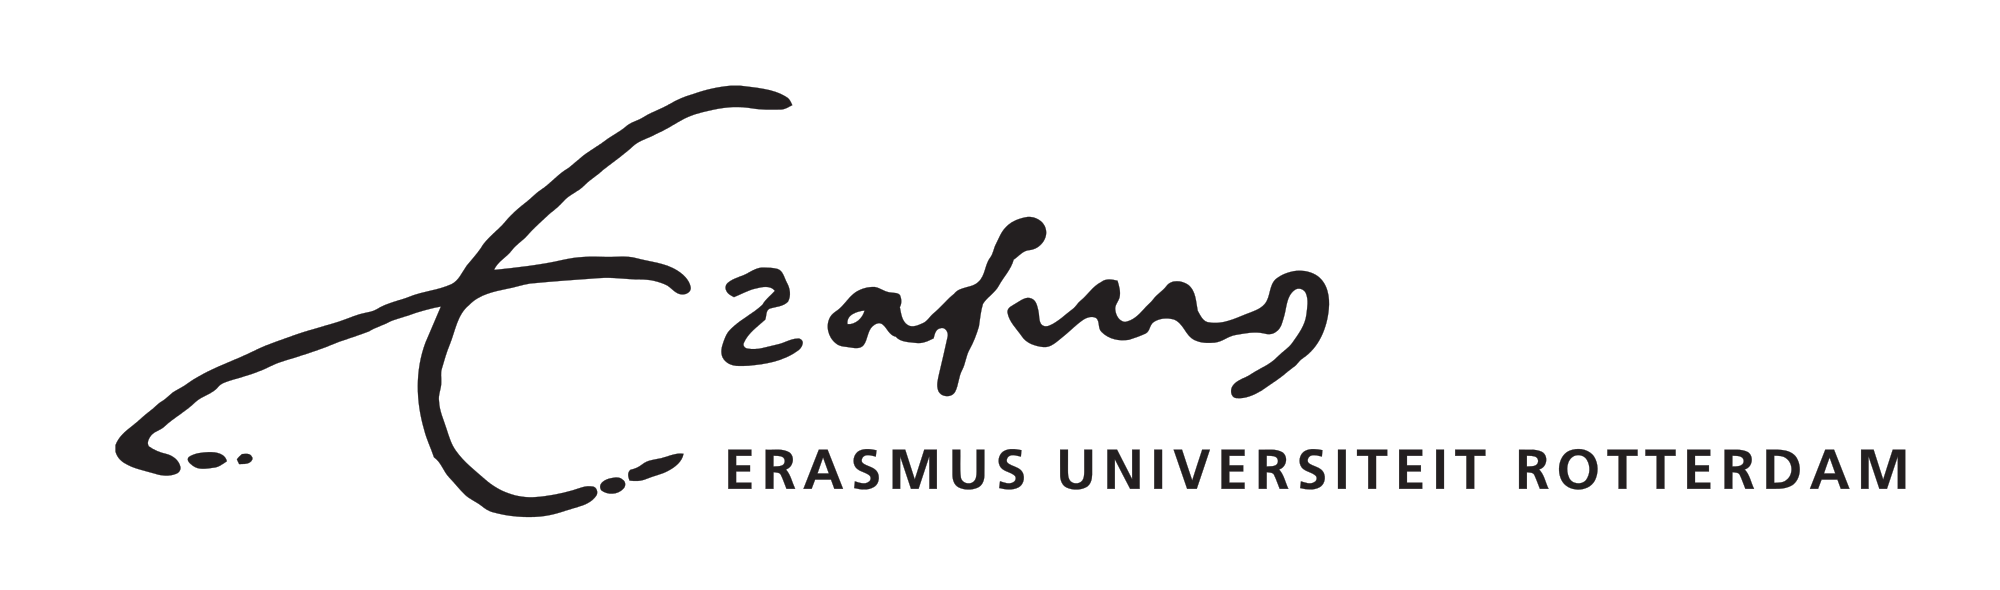 Rotterdam Logo - File:Logo Erasmus Universiteit Rotterdam.svg - Wikimedia Commons